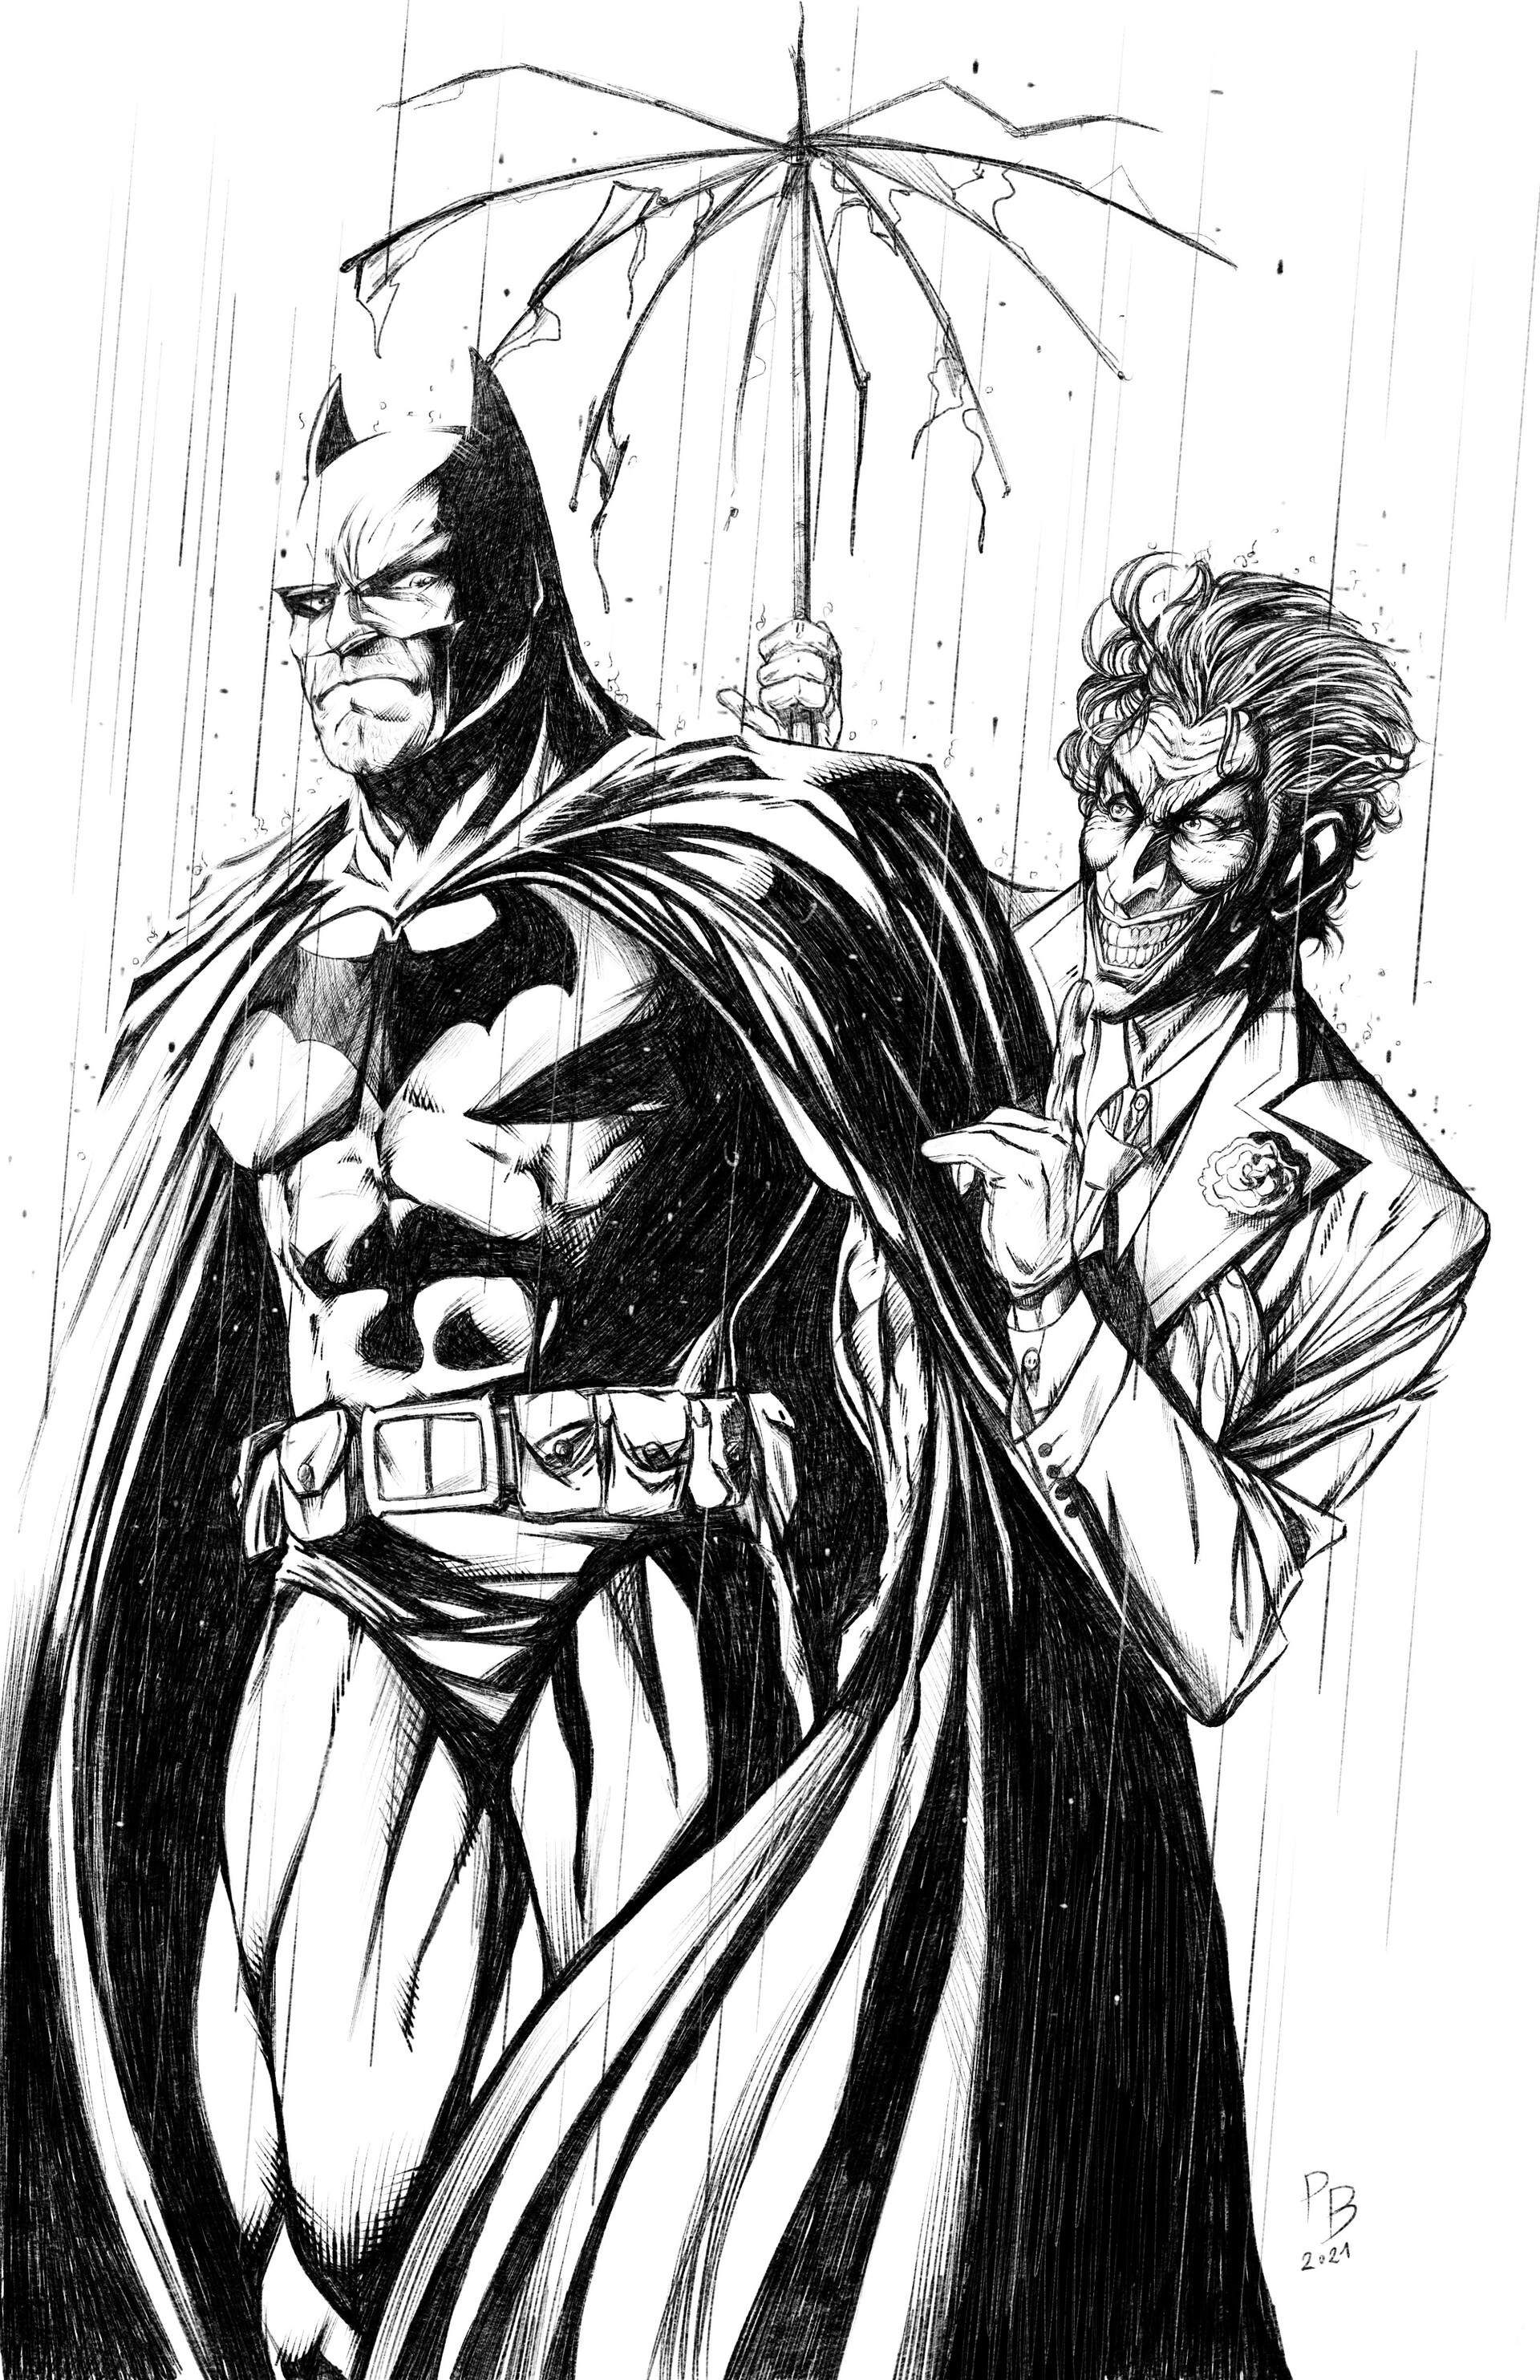 ArtStation - Batman and Joker under the rain :D